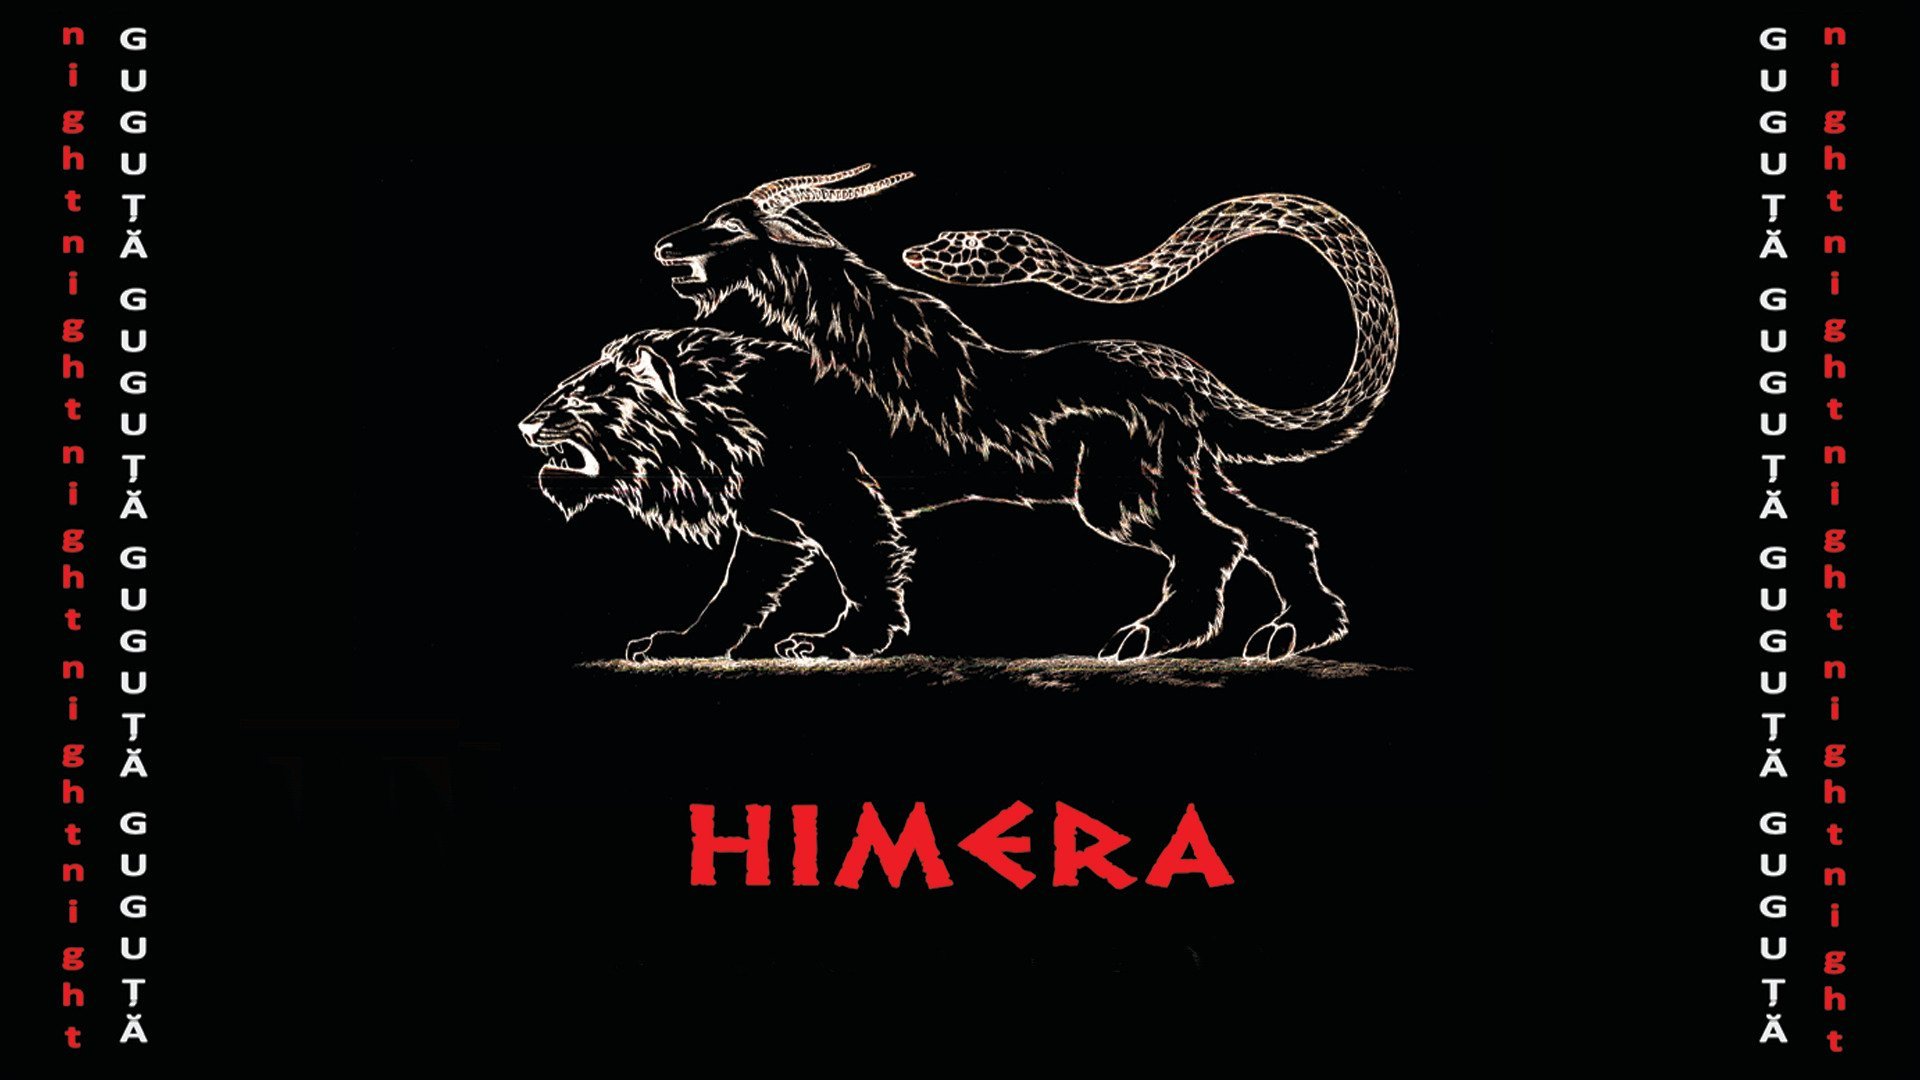 Himera